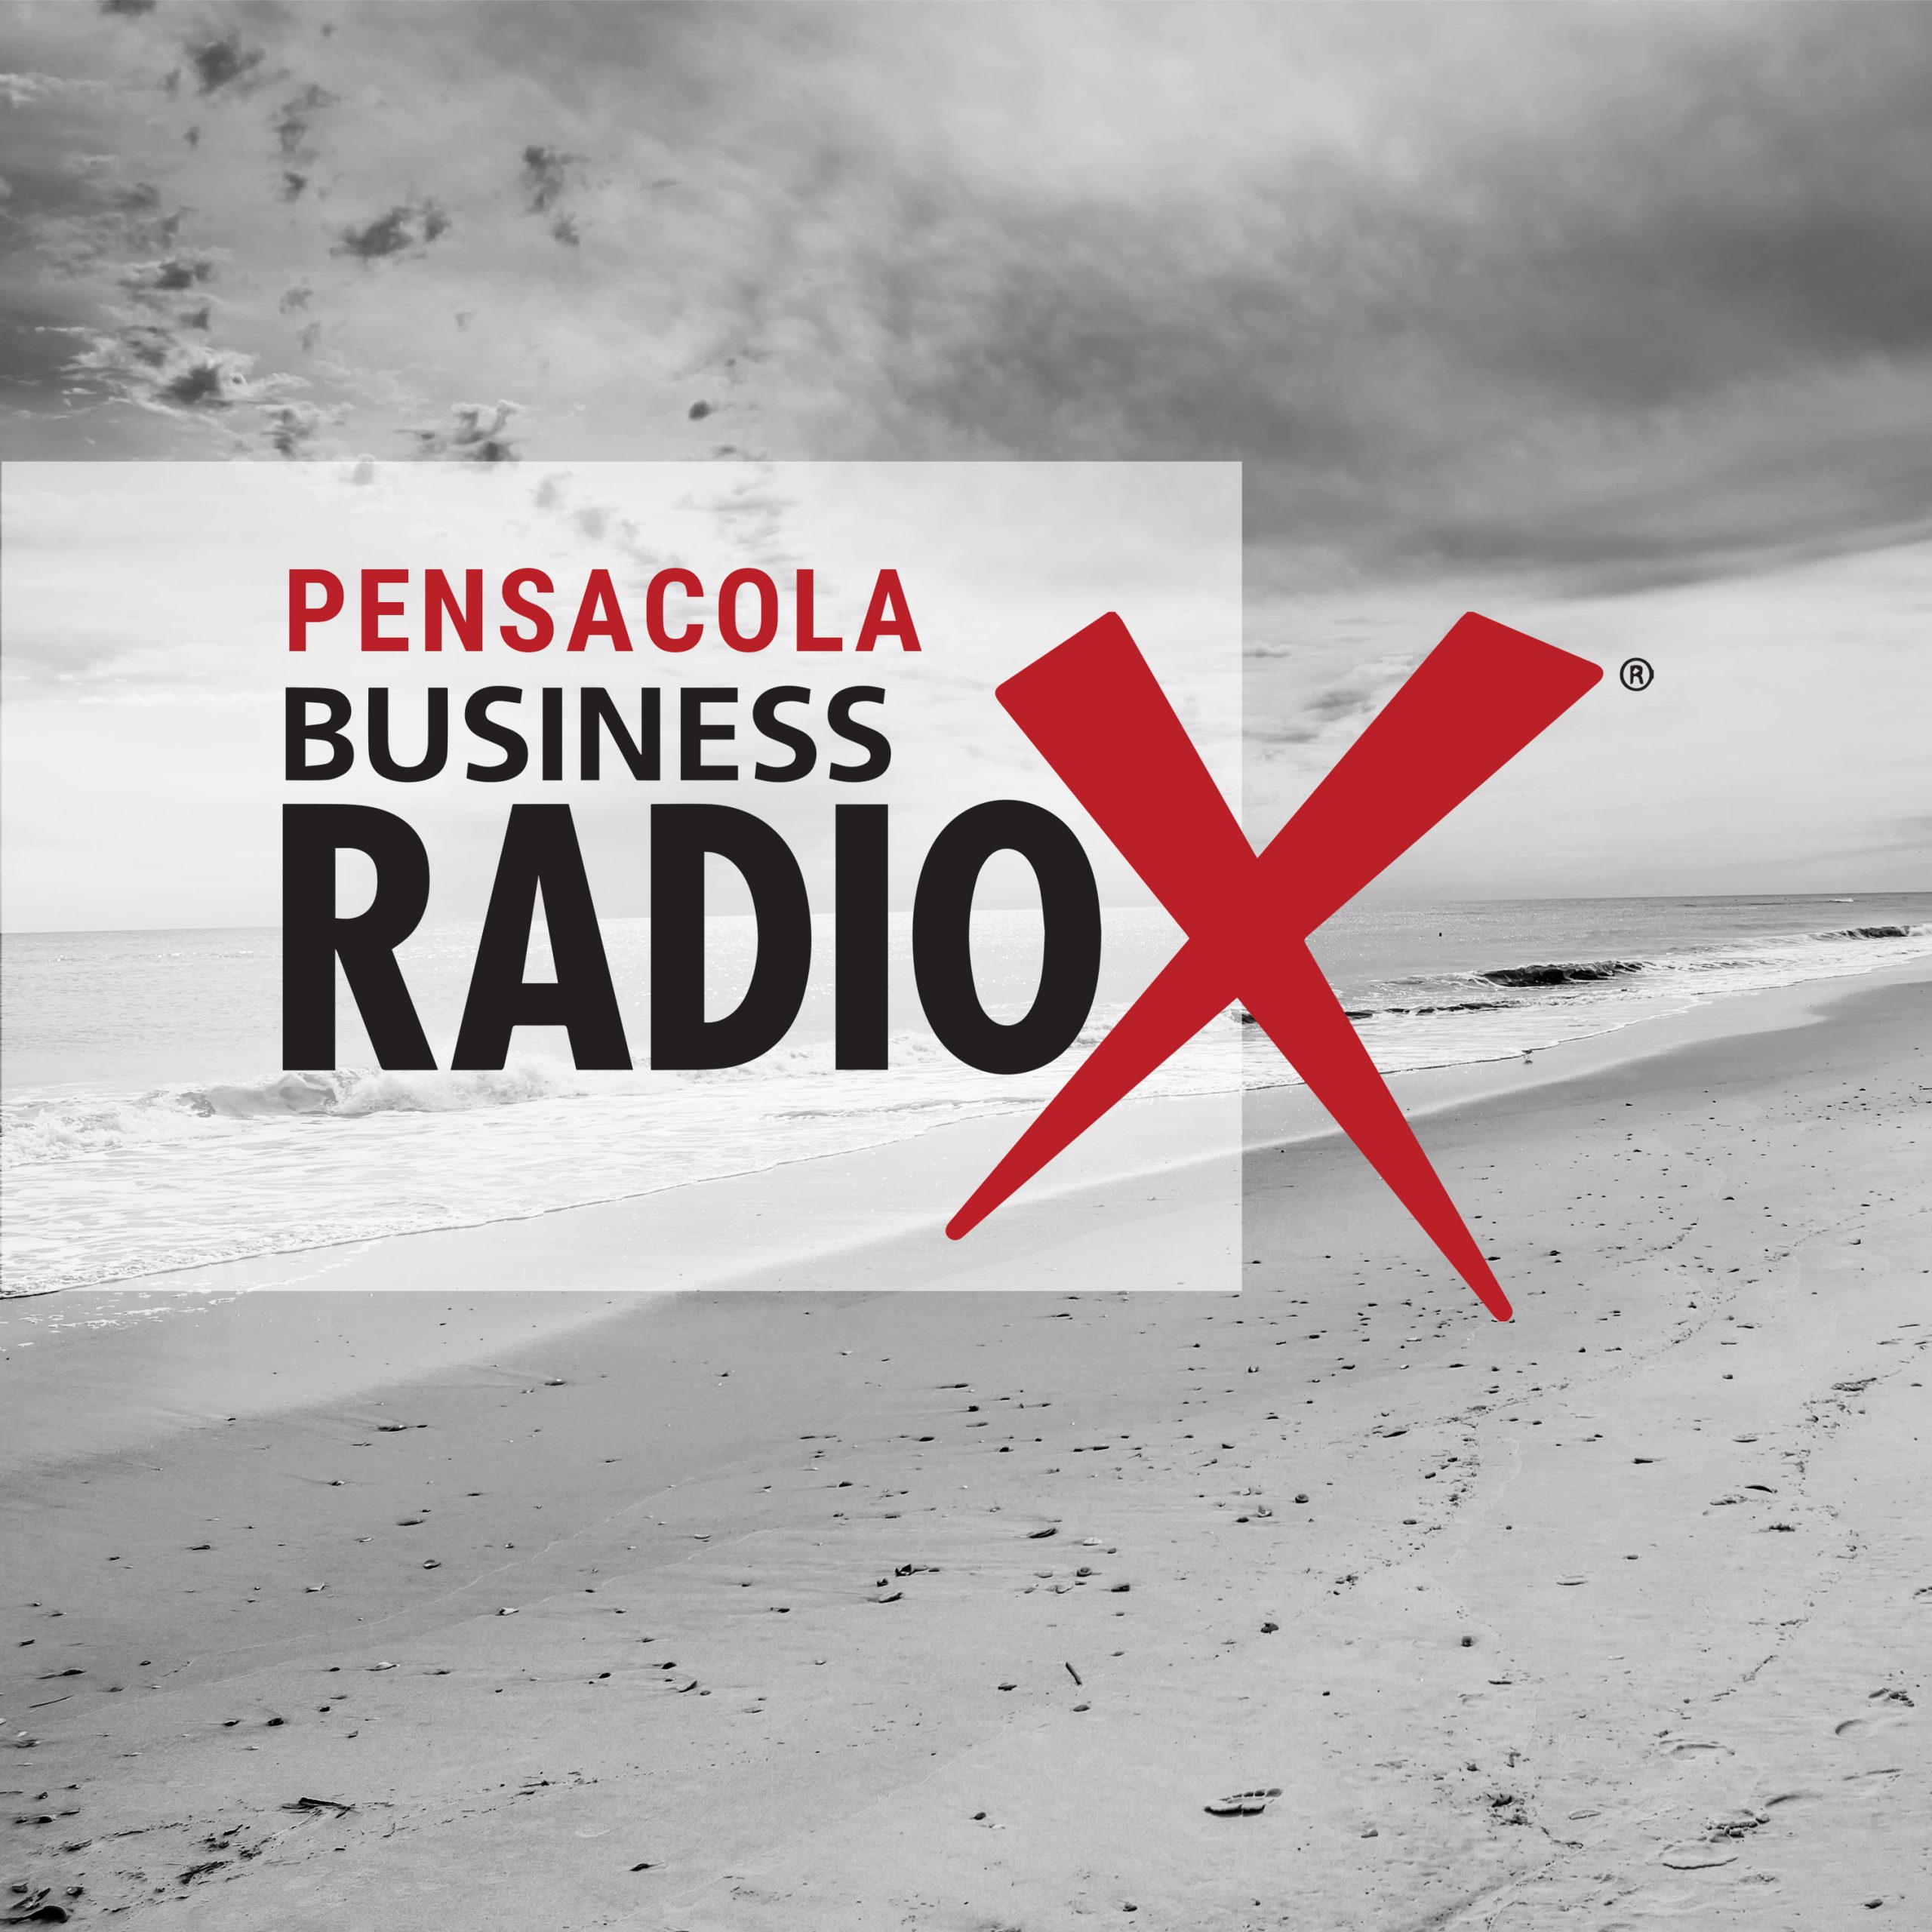 Pensacola Business Radio 10.13.15 Guests: Eric Stevenson w/ Stevenson Klotz Law Firm and Bill Sheffield w/ Bill Sheffield Realty